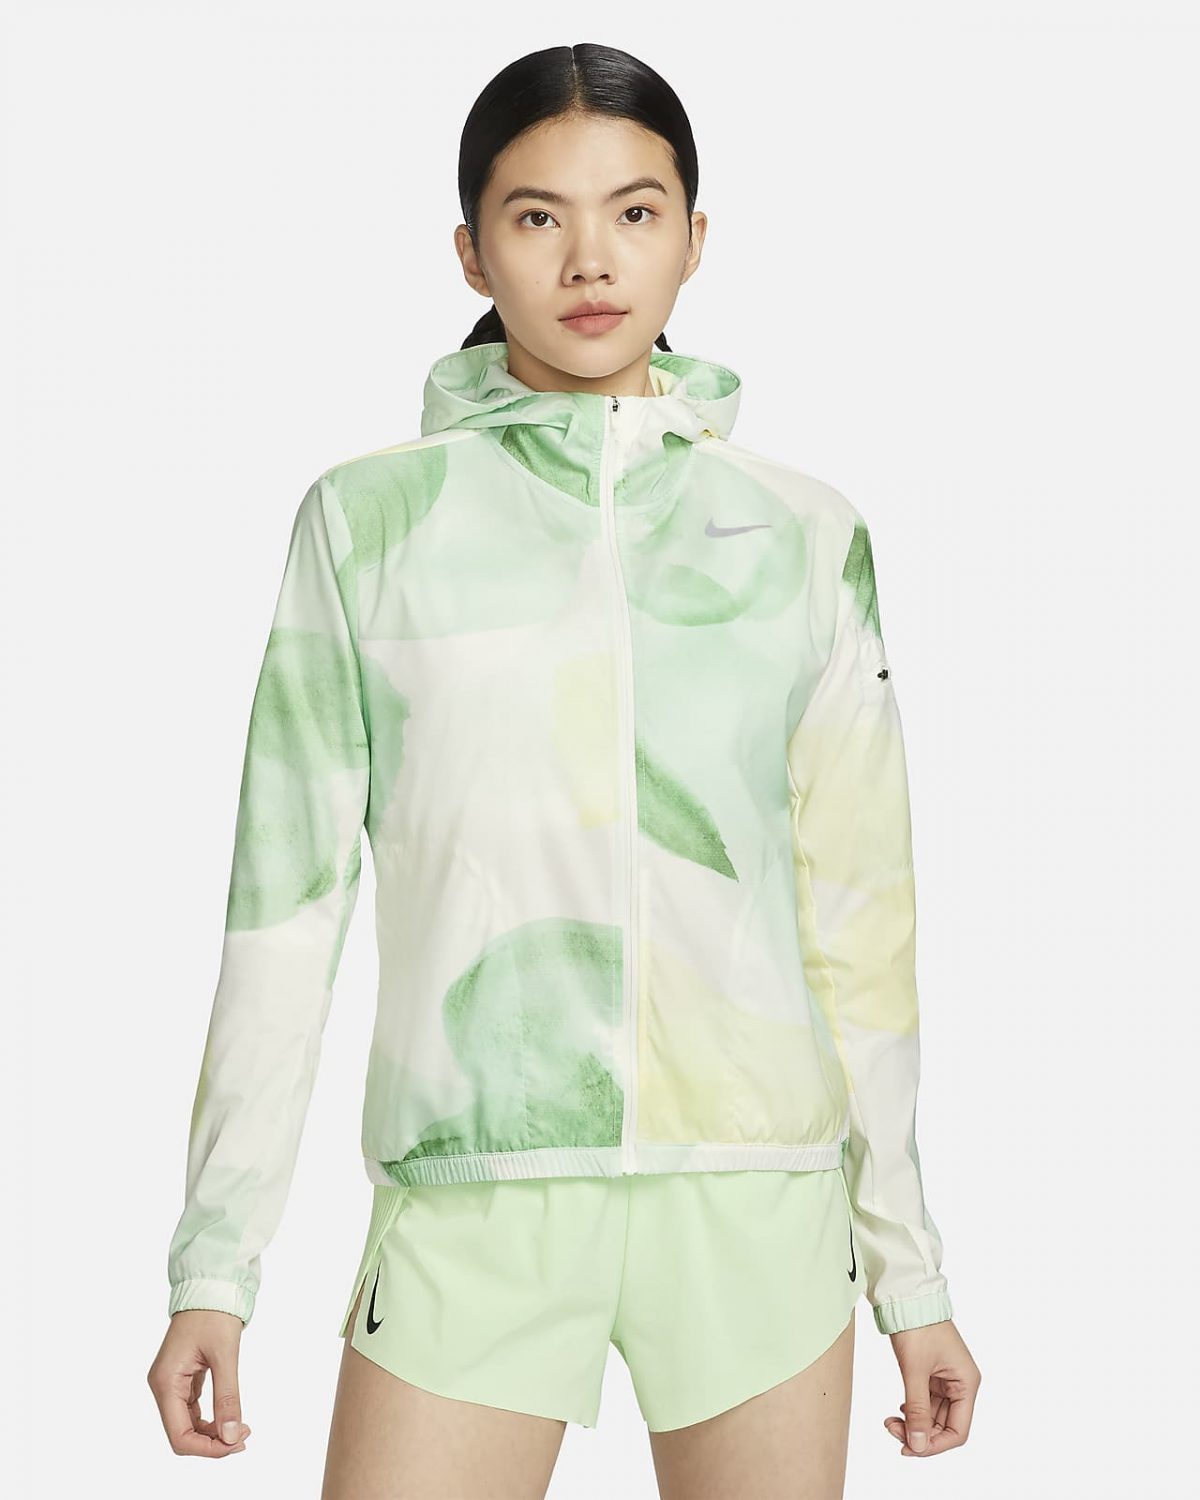 Женская куртка Nike Impossibly Light белая фото